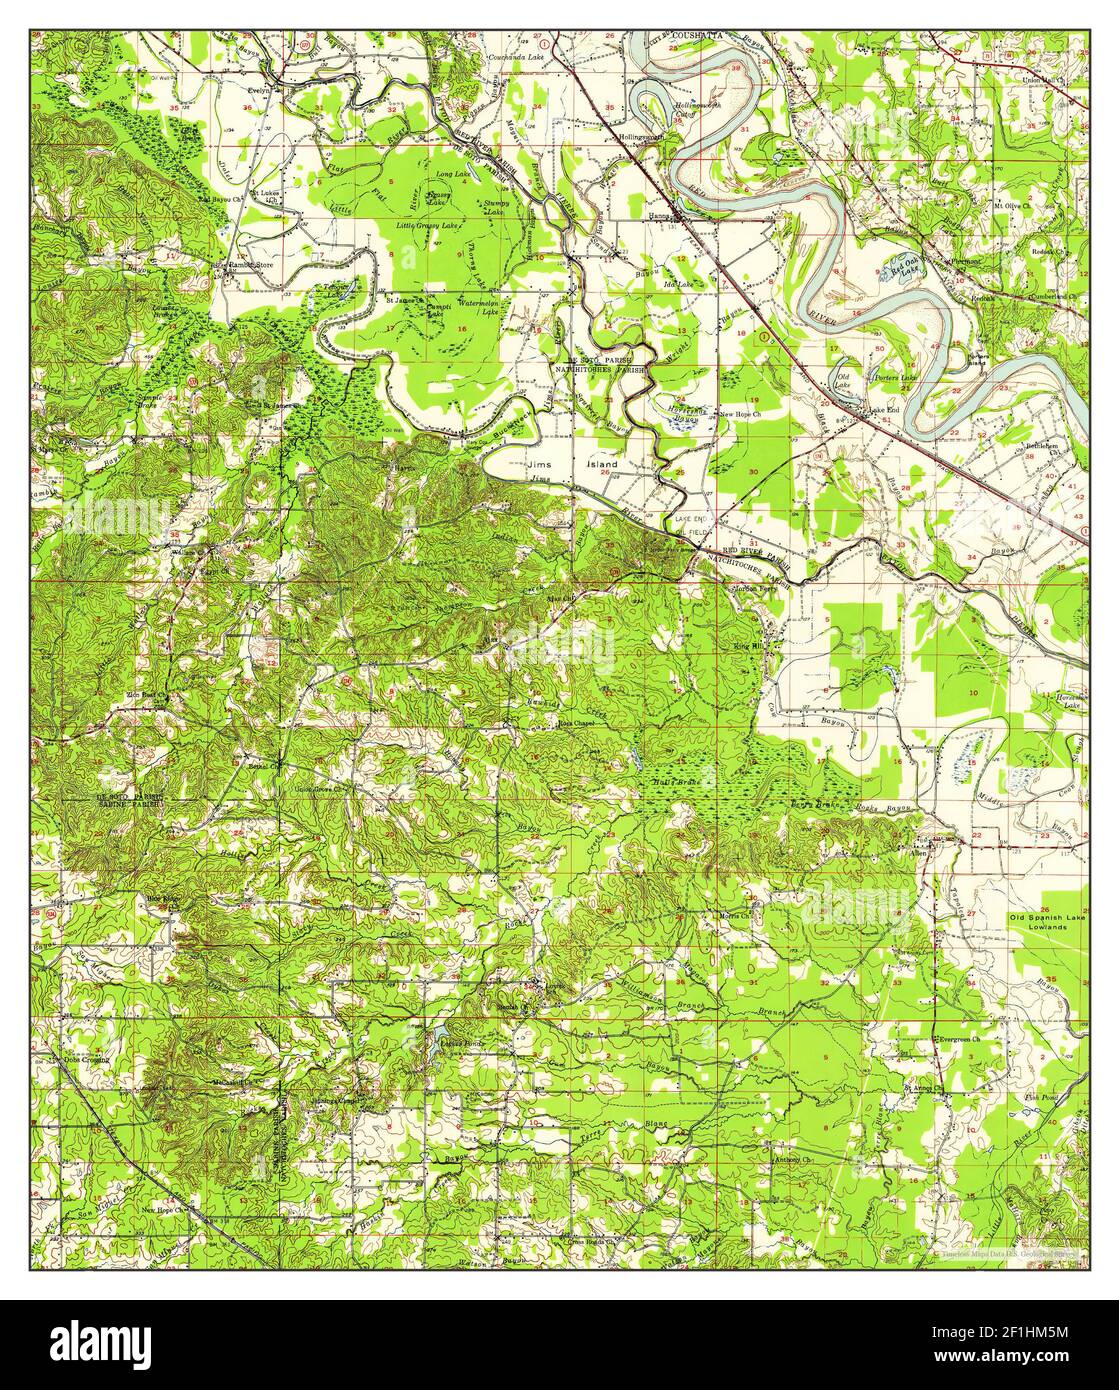 Hanna, Louisiana, map 1957, 1:62500, United States of America by Timeless Maps, data U.S. Geological Survey Stock Photo